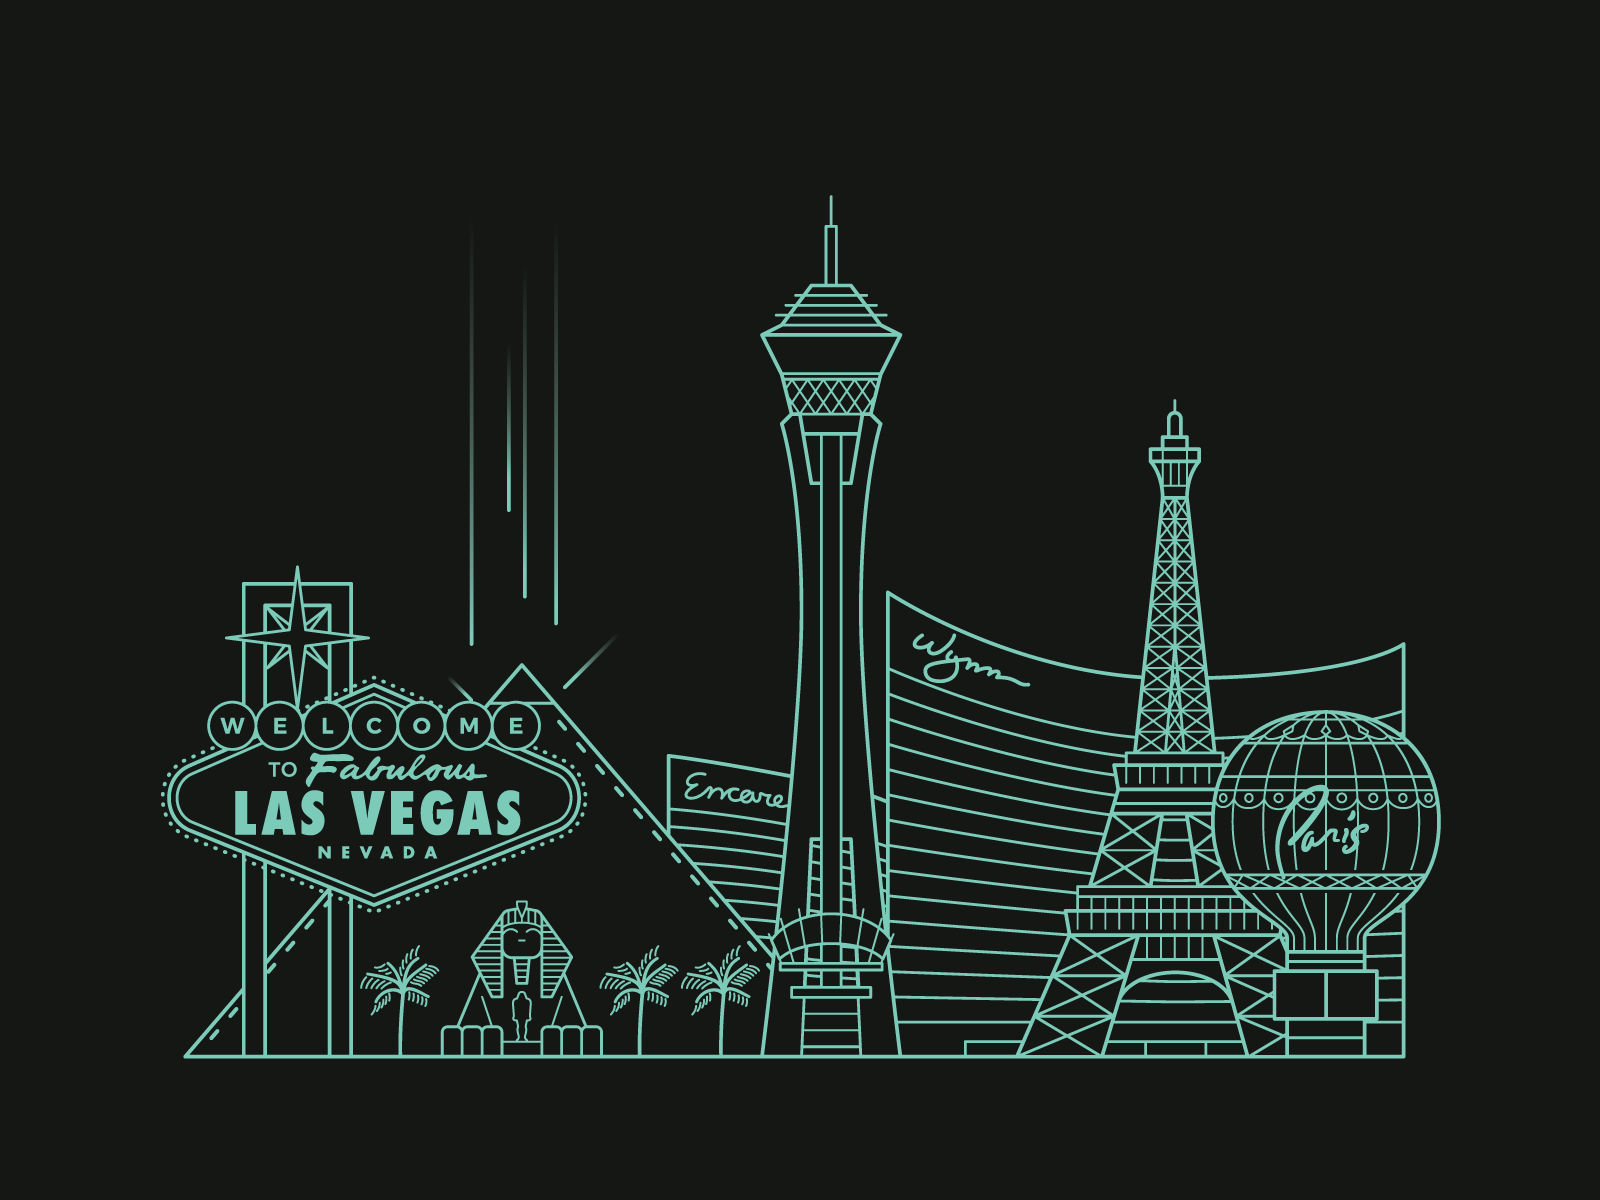 Las Vegas skyline by Tyler Barber on Dribbble